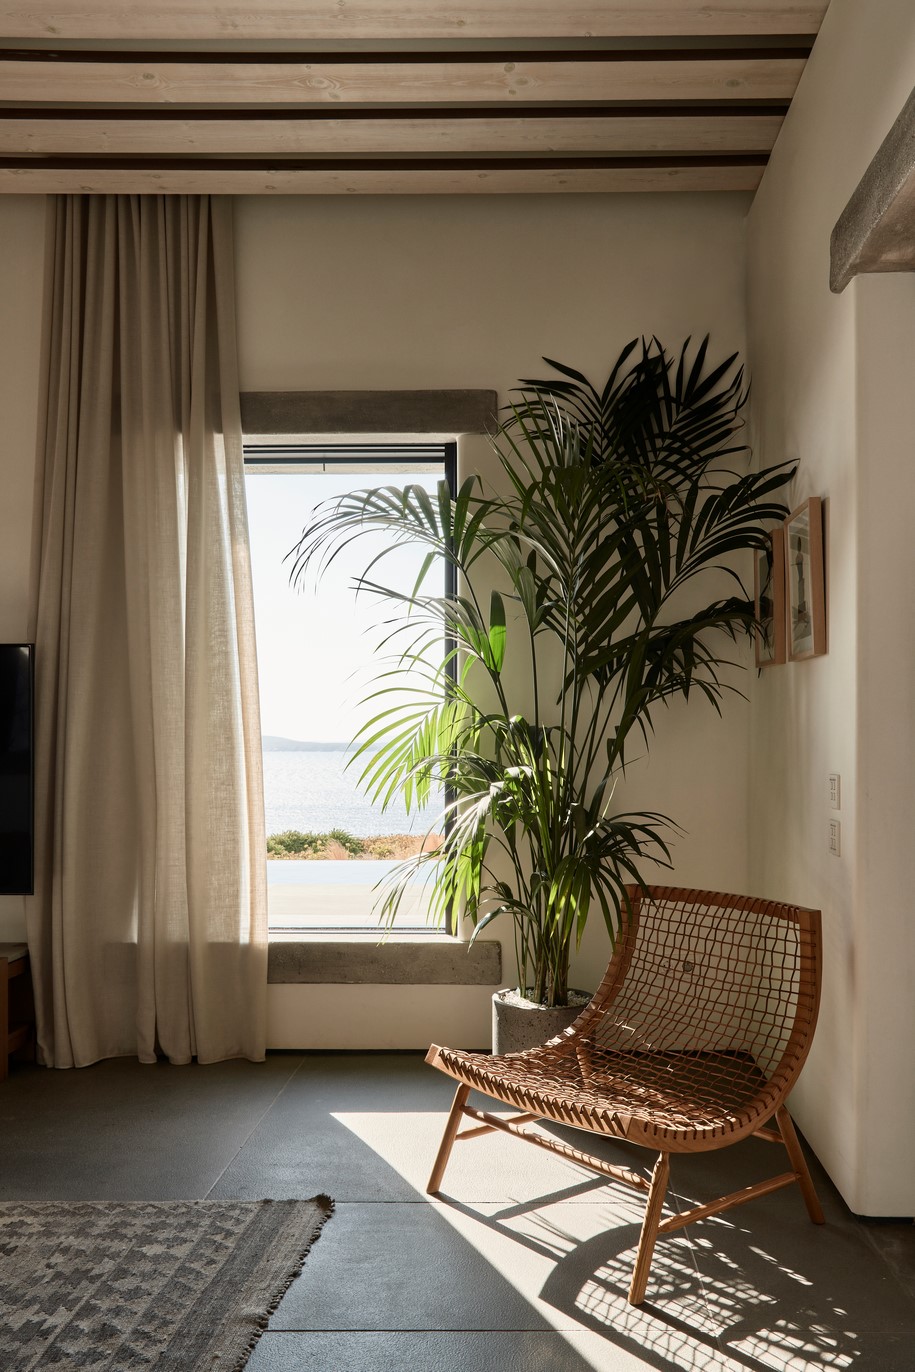 Archisearch K- Studio designed Villa Mandra in Mykonos, Greece upon the idea of slow, laid-back summer living